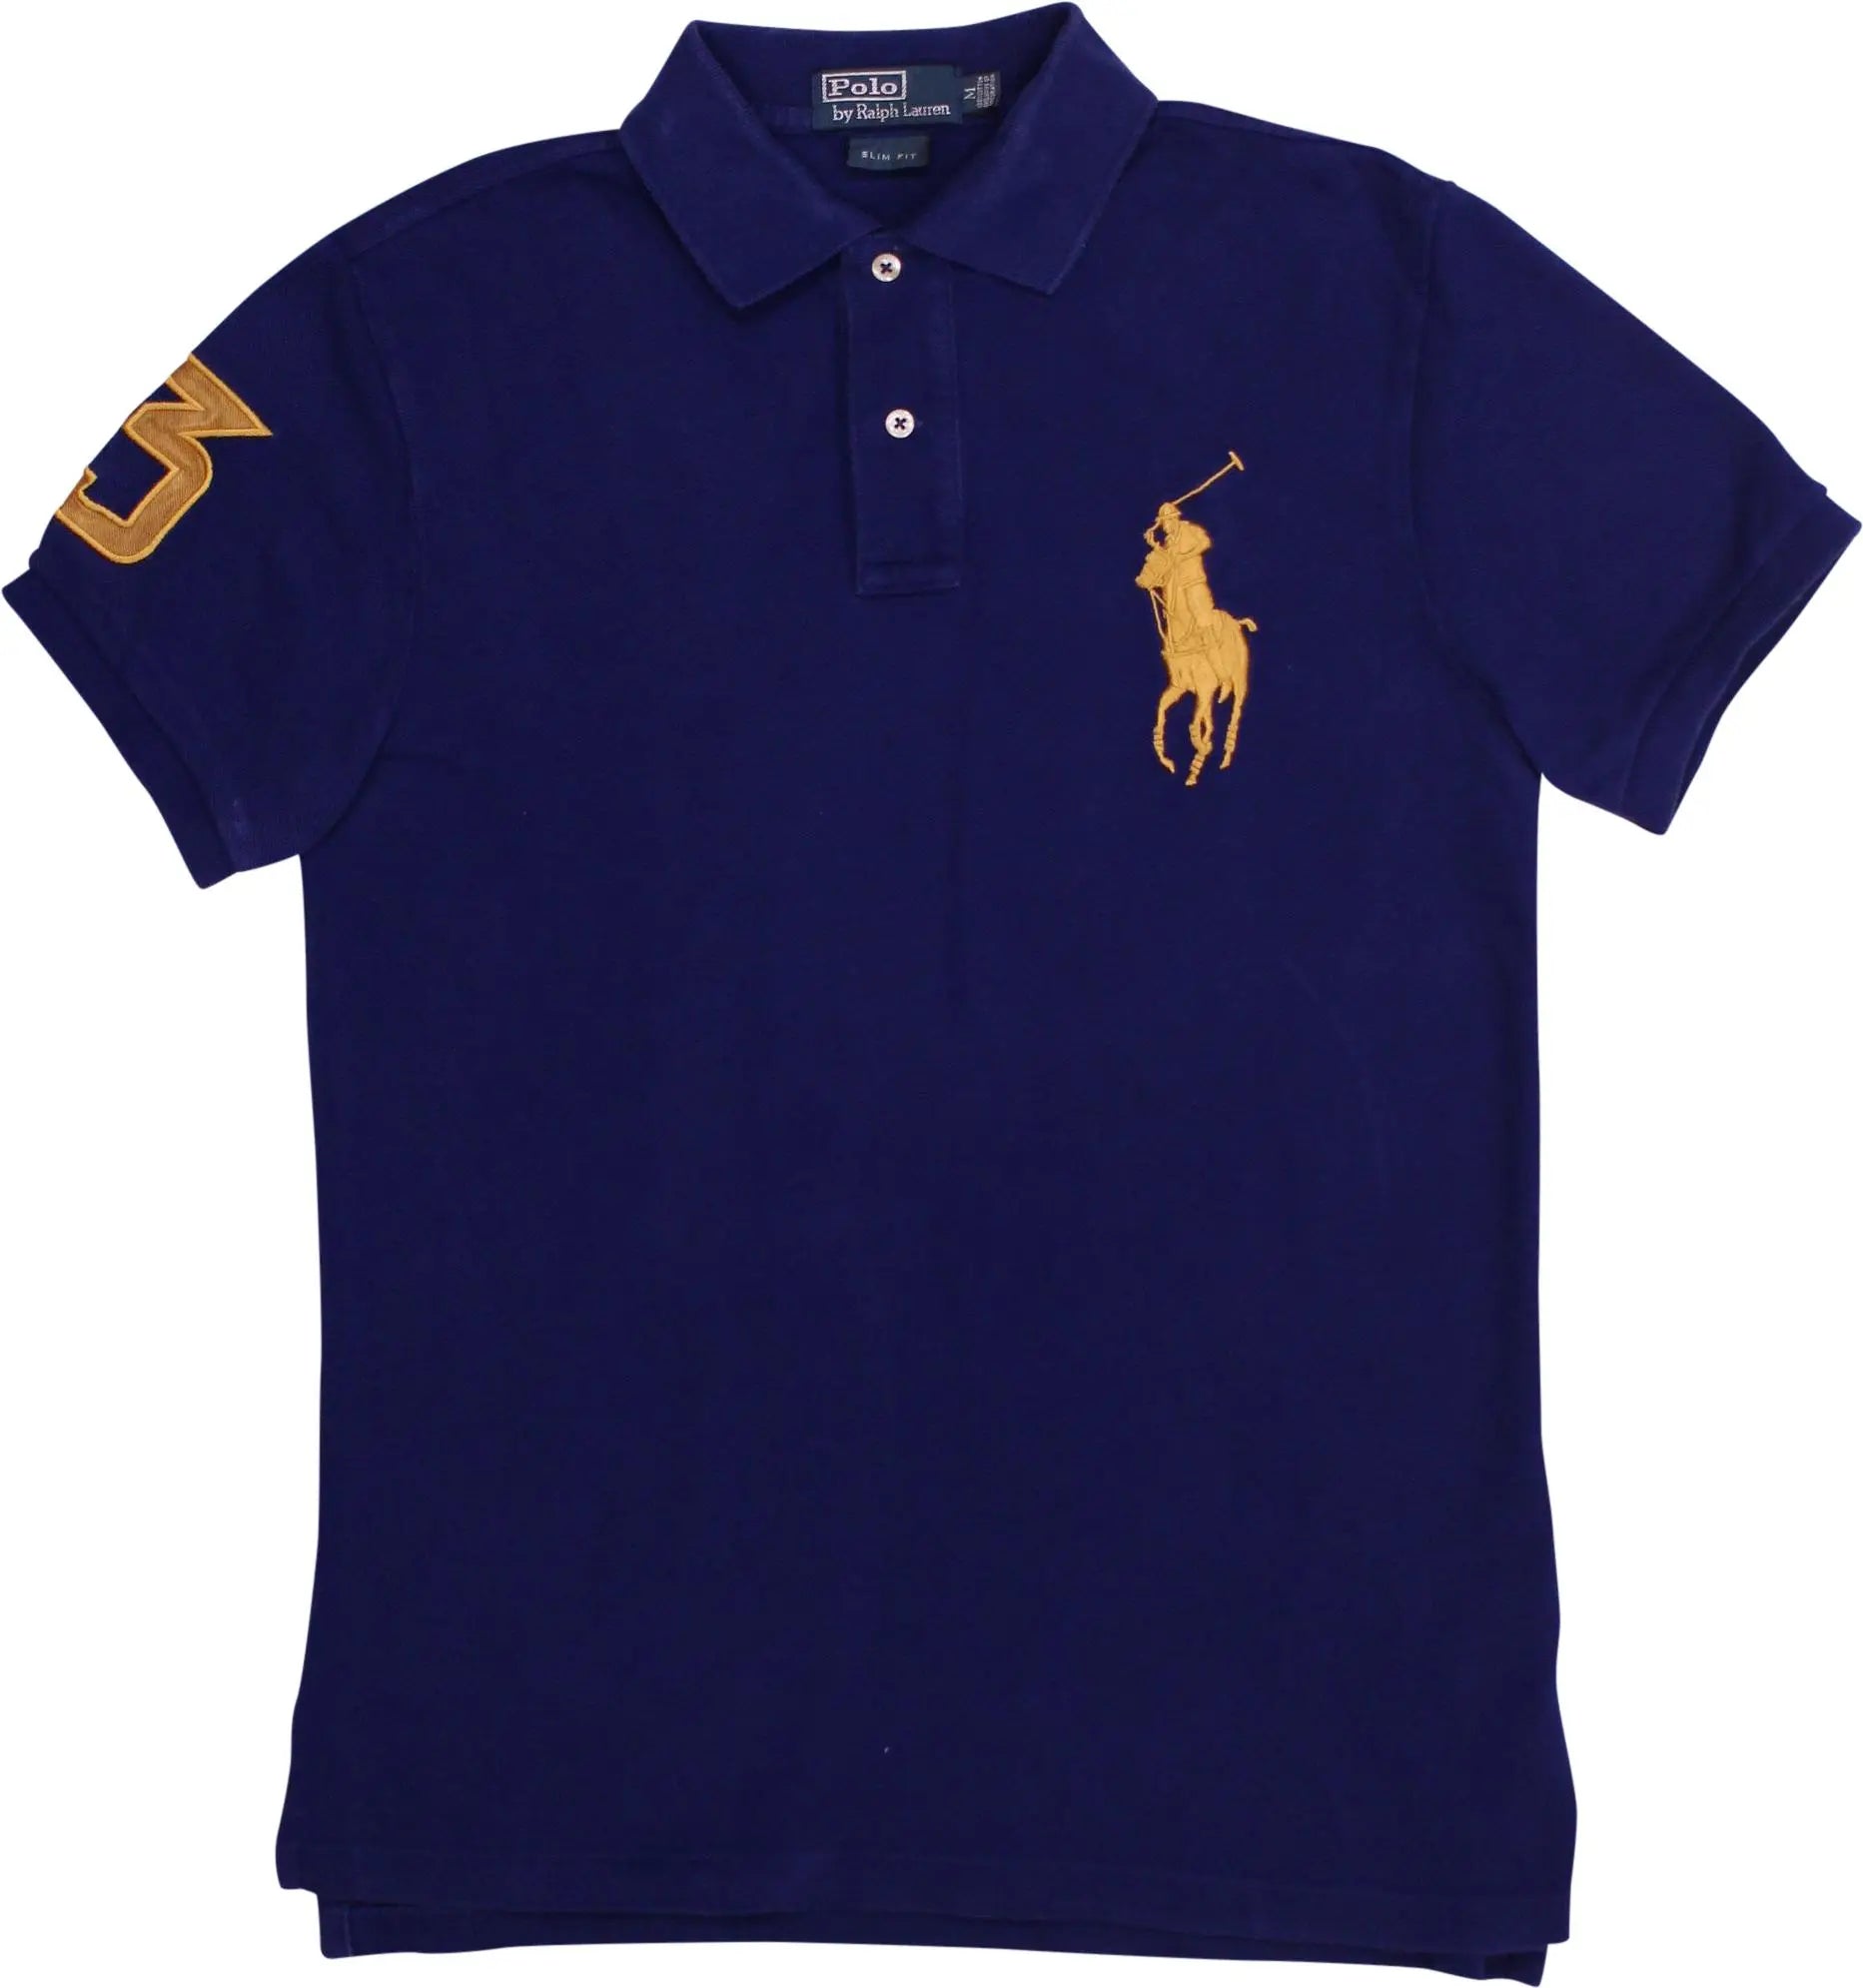 Ralph Lauren - Blue Slim Fit Polo Shirt by Ralph Lauren- ThriftTale.com - Vintage and second handclothing